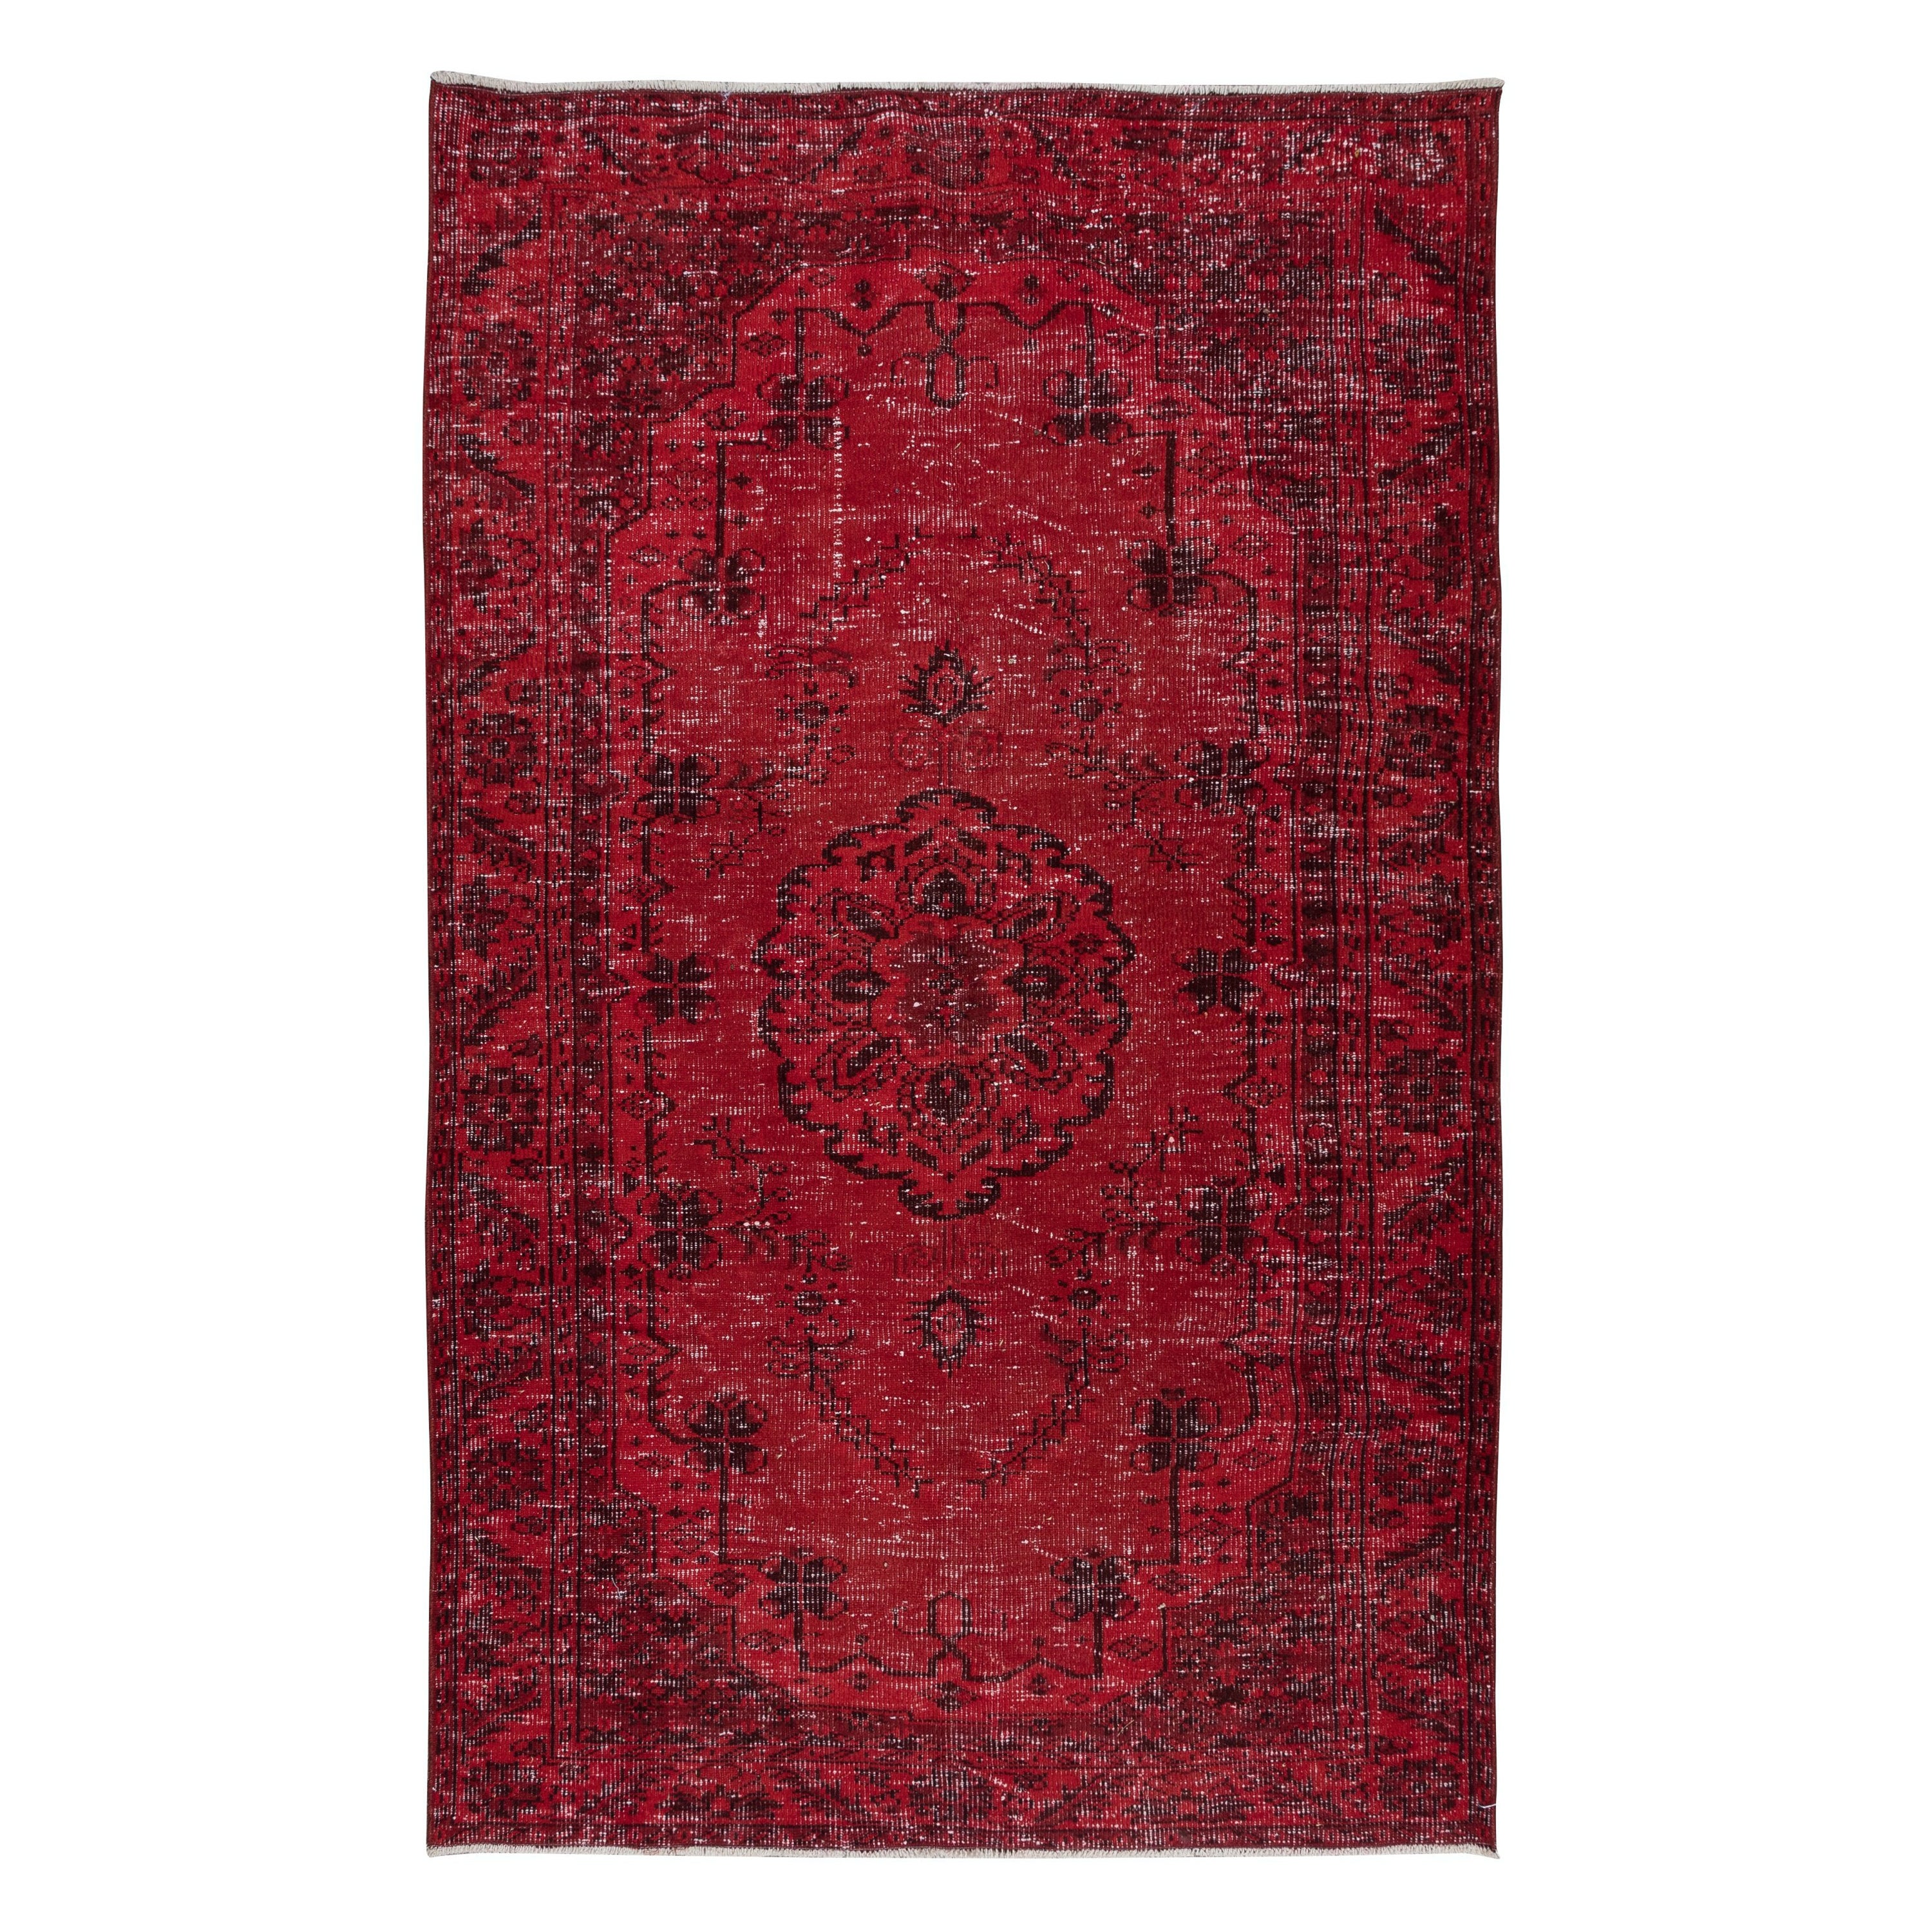 5.6x9 Ft Modern & Contemporary Rug in Dark Red, Handmade Turkish Wool Carpet